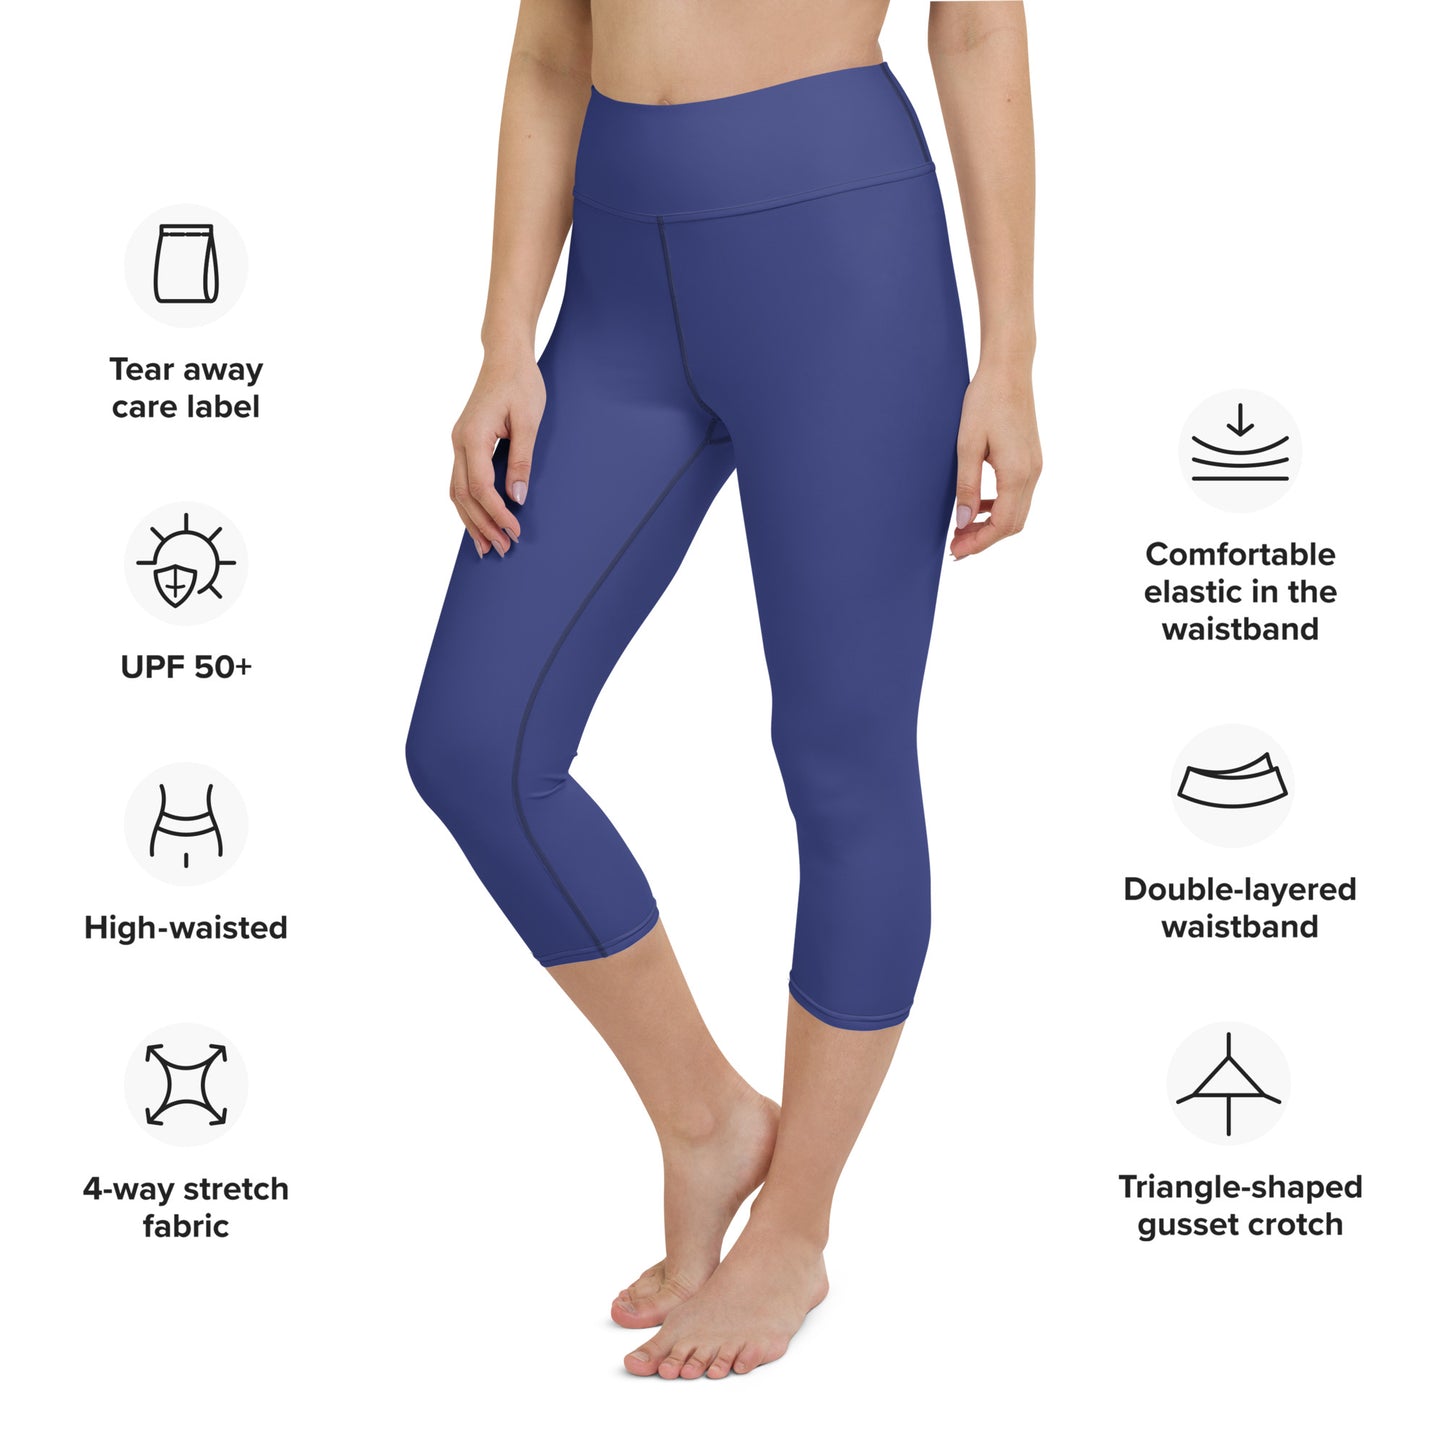 Monopoli Solid Blue Capri High Waist Yoga Leggings / Pants with Inside Pocket